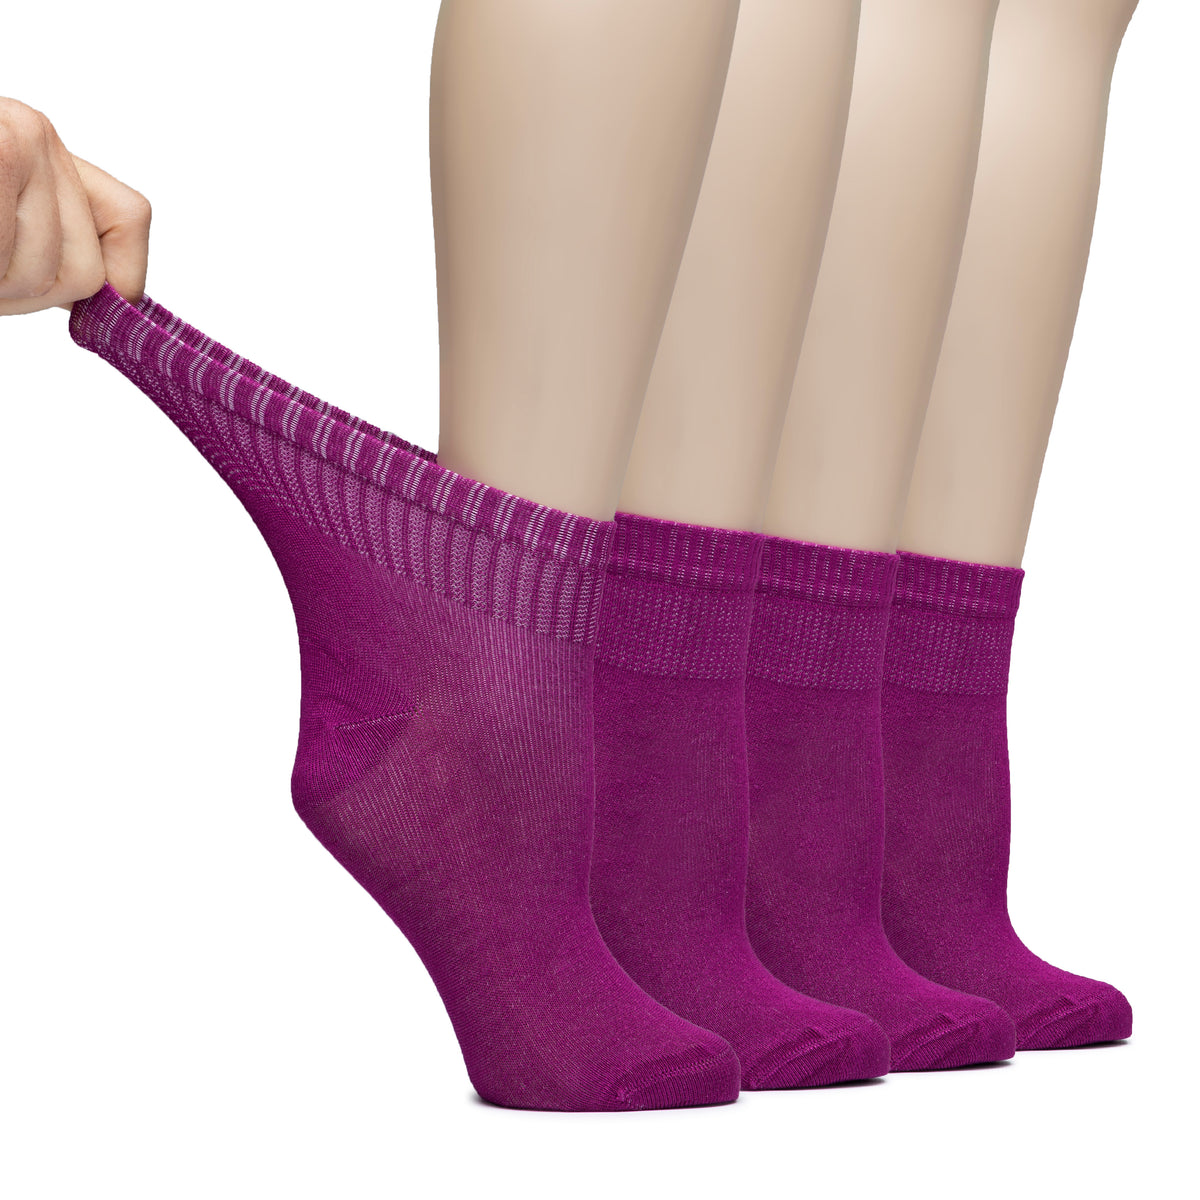 Hugh Ugoli Lightweight Women's Diabetic Ankle Socks Bamboo Thin Socks Seamless Toe and Non-Binding Top, 4 Pairs, , Shoe Size: 6-9/10-12 | Shoe Size: 6-9 | Green